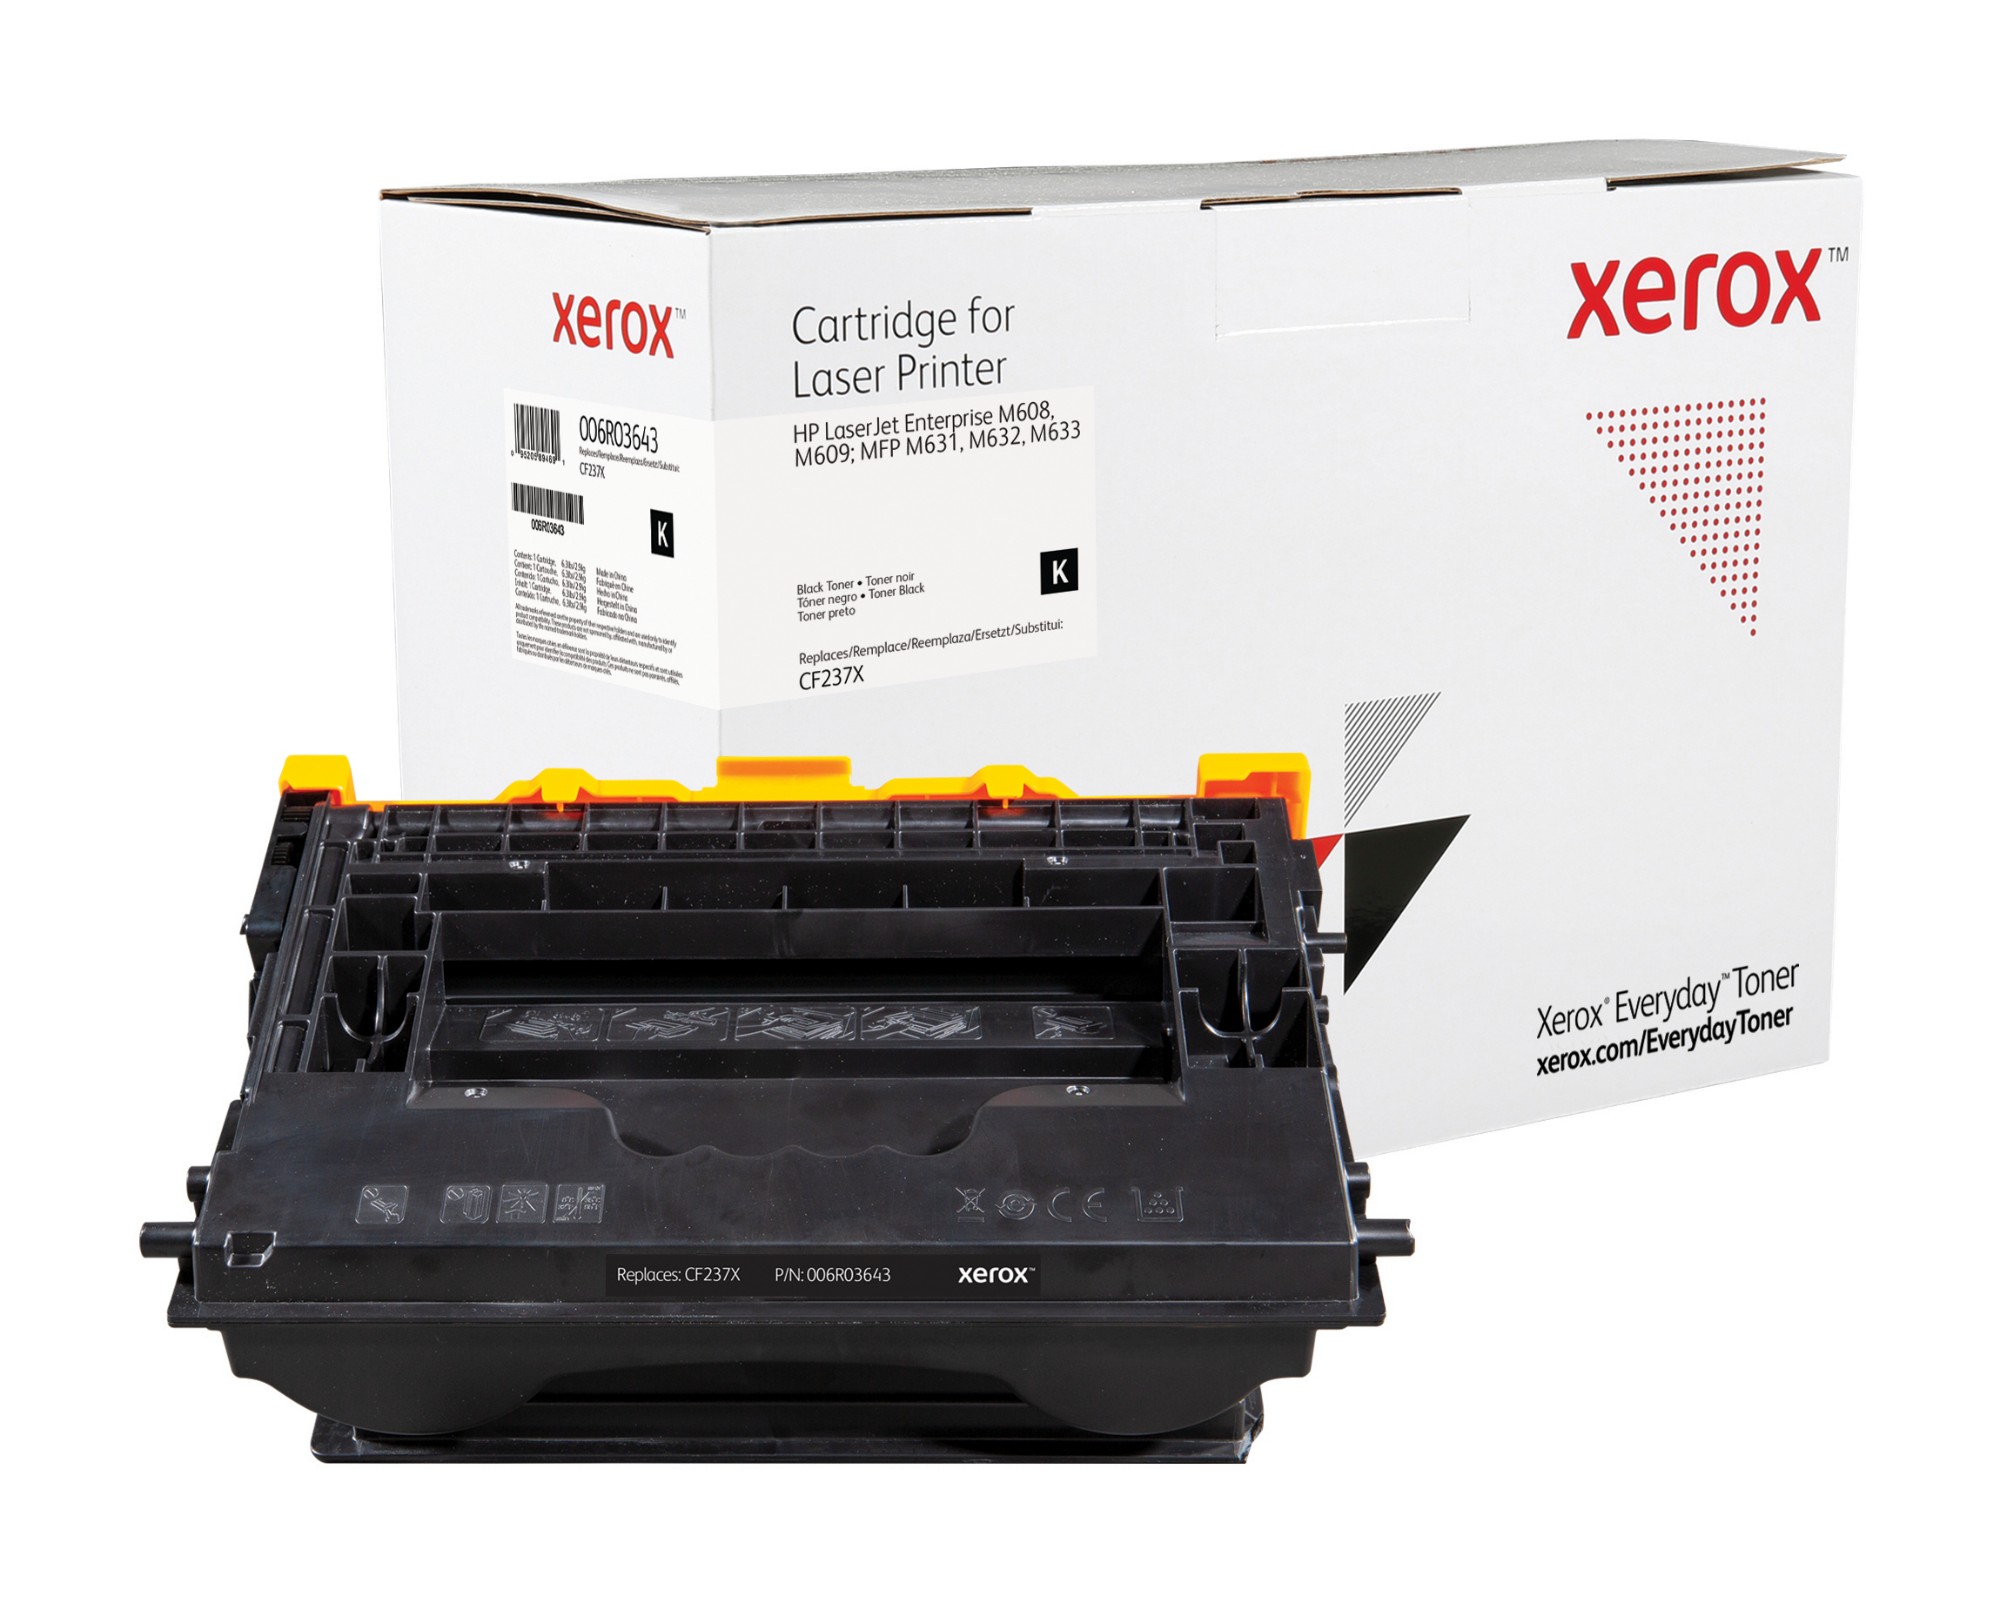 Xerox Everyday Toner for HP CF237X (37X) Black Toner Cartridge